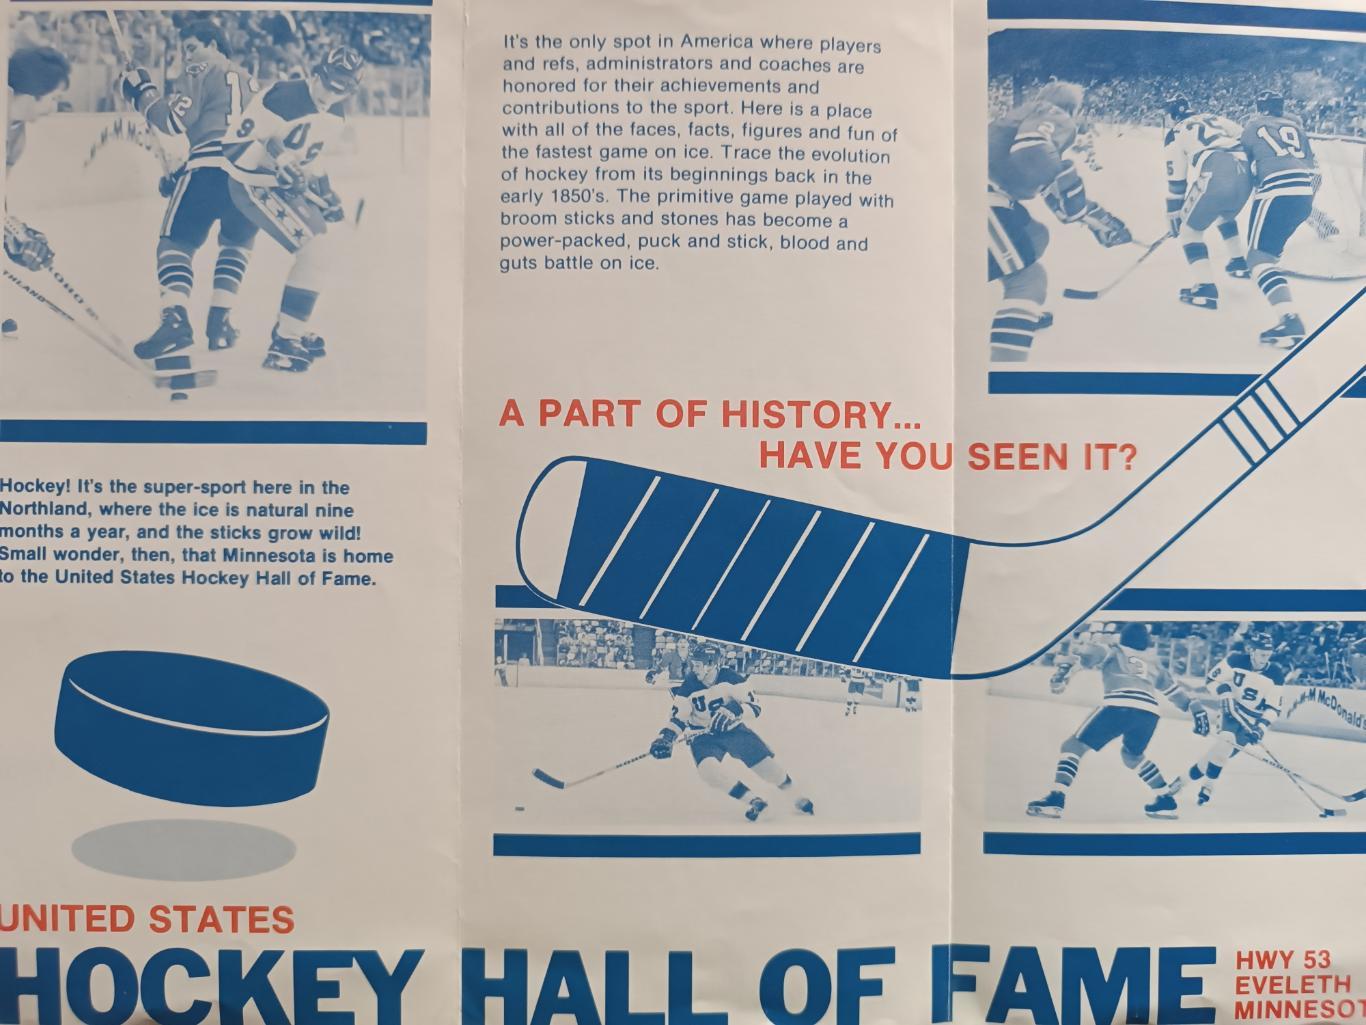 ХОККЕЙ БУКЛЕТ СУВЕНИР ЗАЛ СЛАВЫ ЭВЕЛЕТ 1975 NHL HALL OF FAME EVELETH MINNESOTA 2